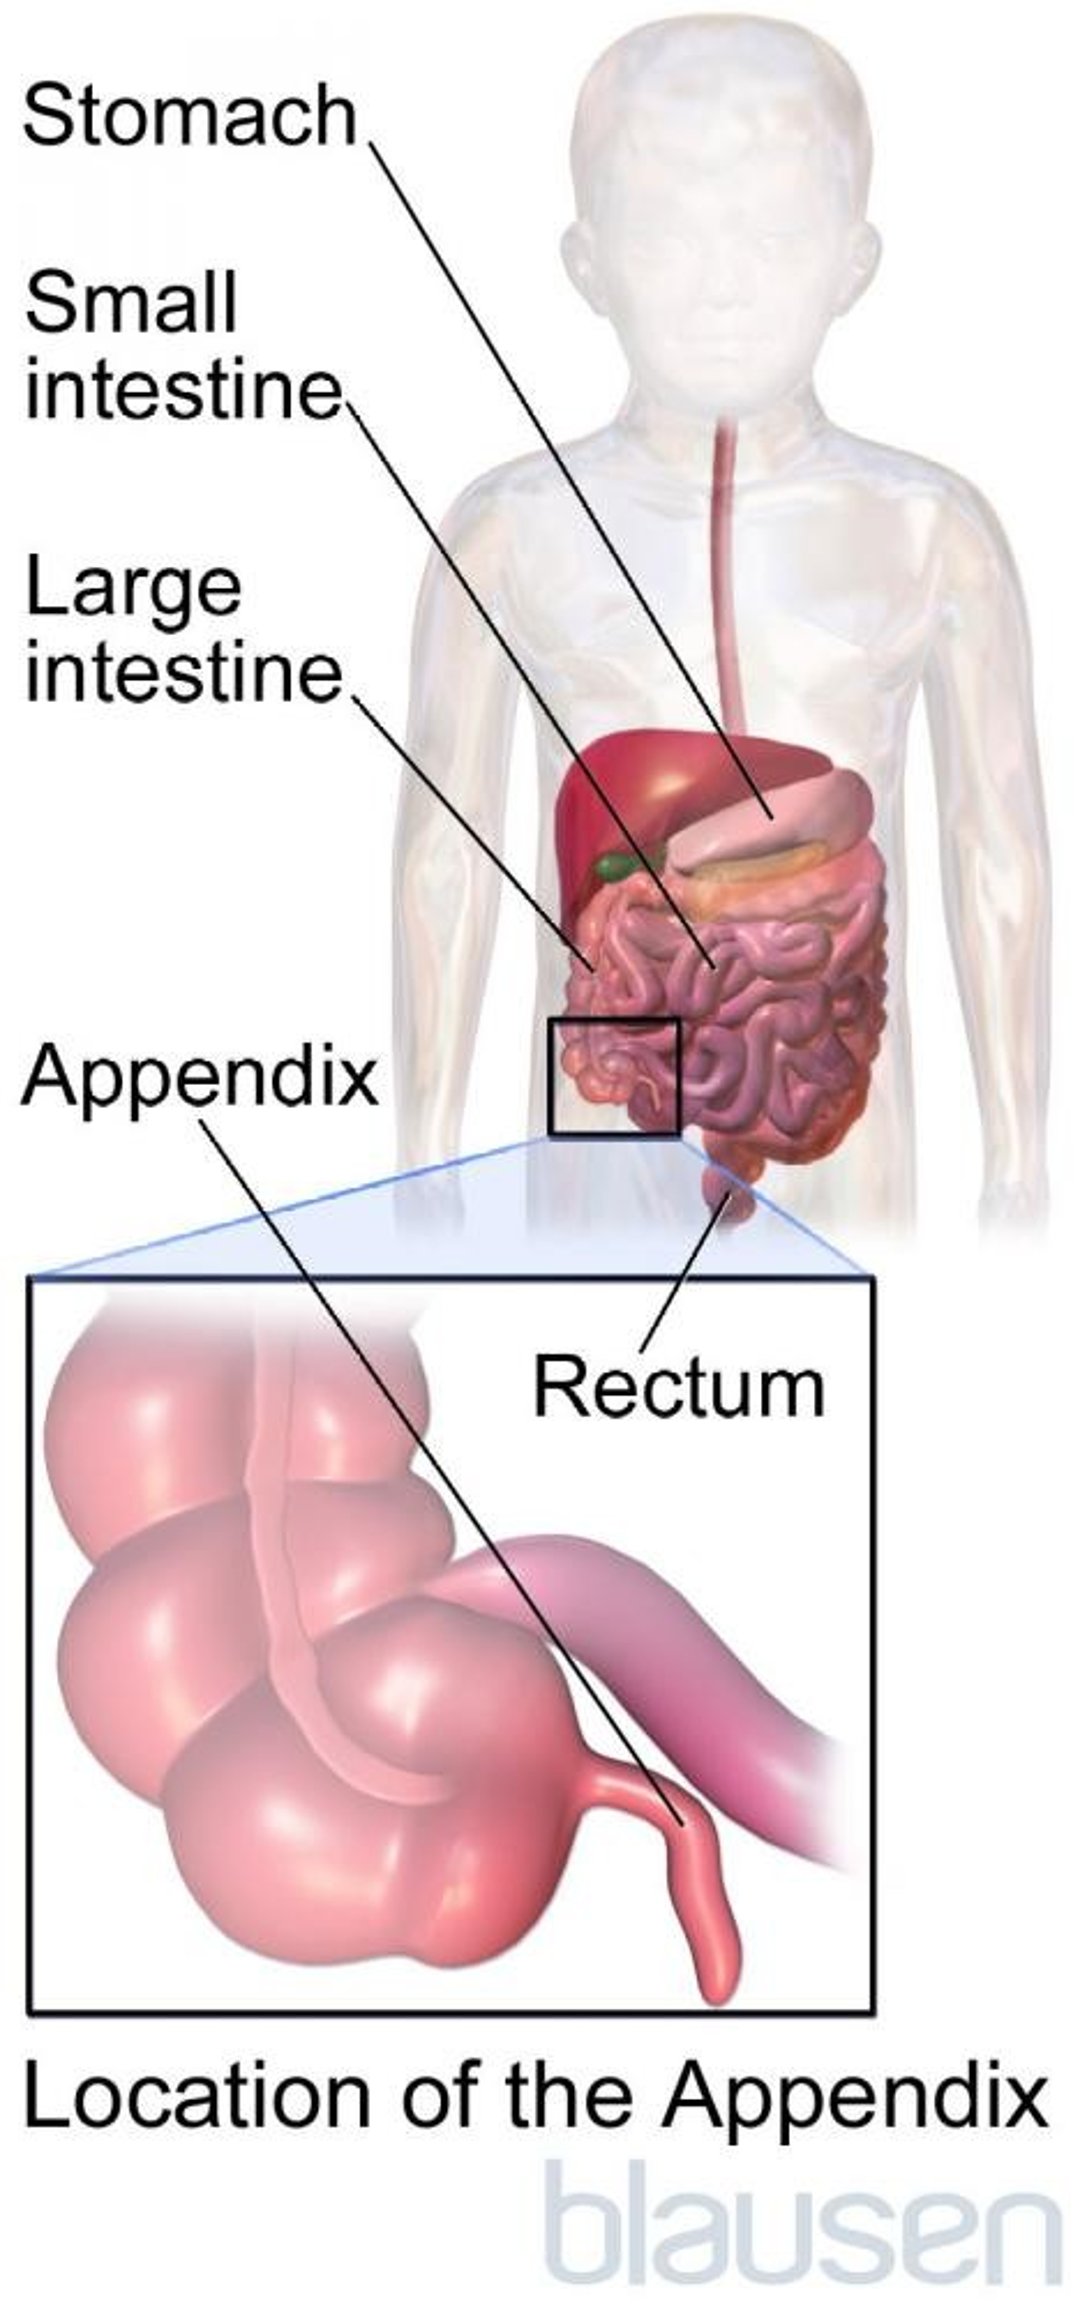 Location of the Appendix